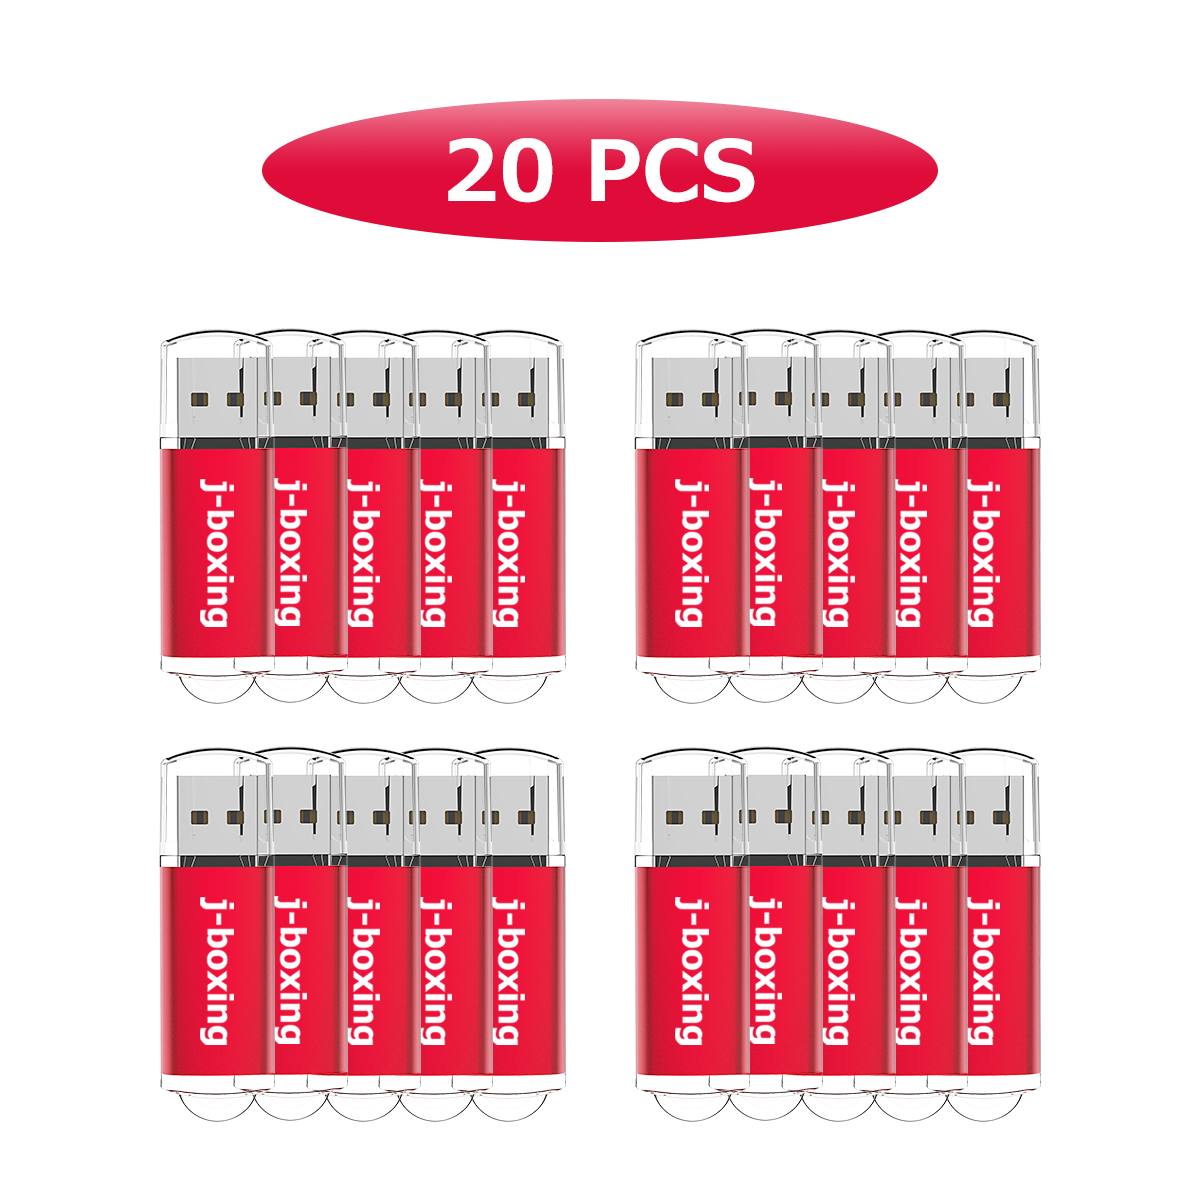 20pcs 512MB USB 2.0 Flash Drive Retângulo Flash Pen aciona de alta velocidade Memória do polegar armazenamento para laptop tablet Mac multicolor